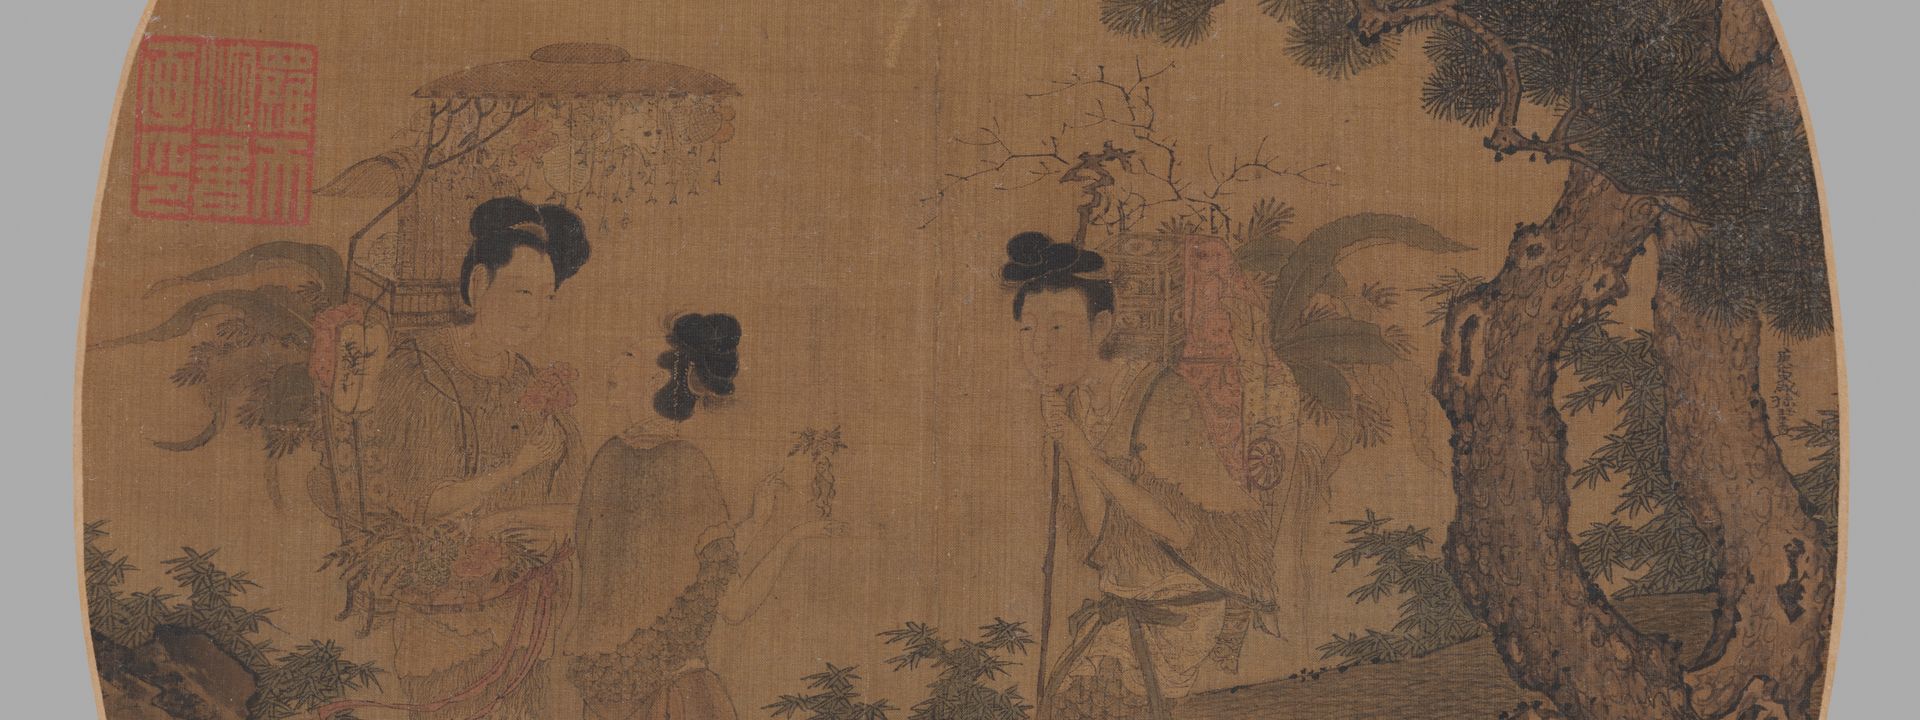 Female Immortals, 14th century, Chinese